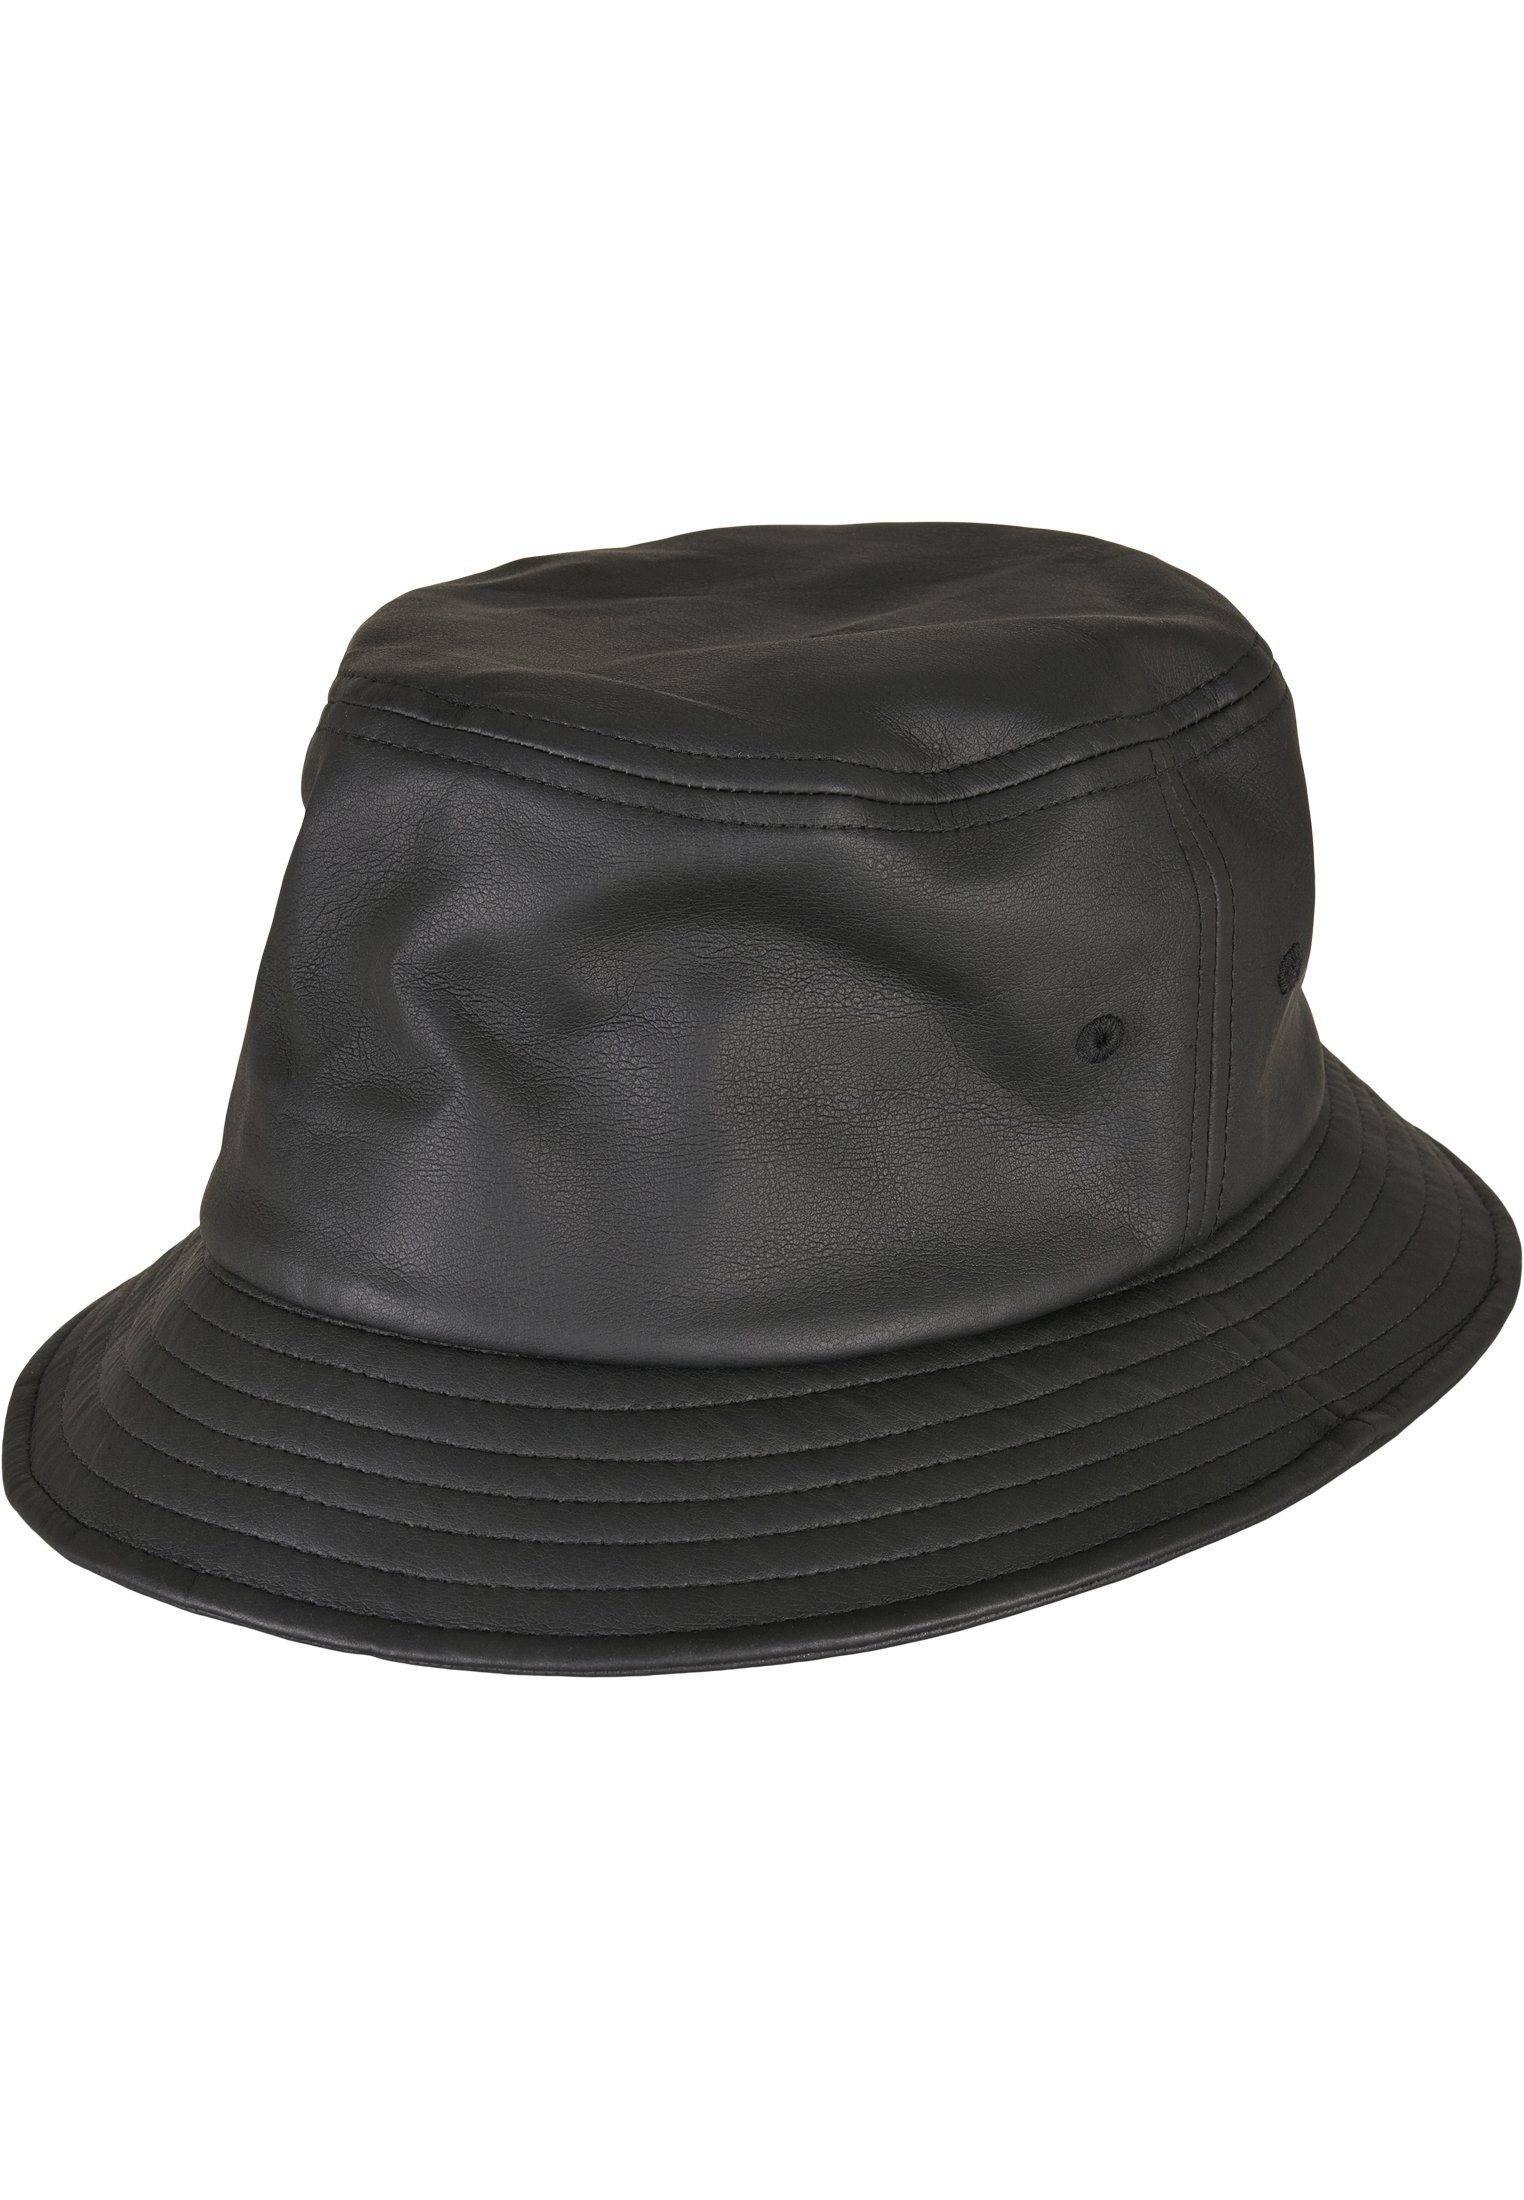 Leather Hat Hat Cap Bucket Flex Flexfit Bucket Imitation